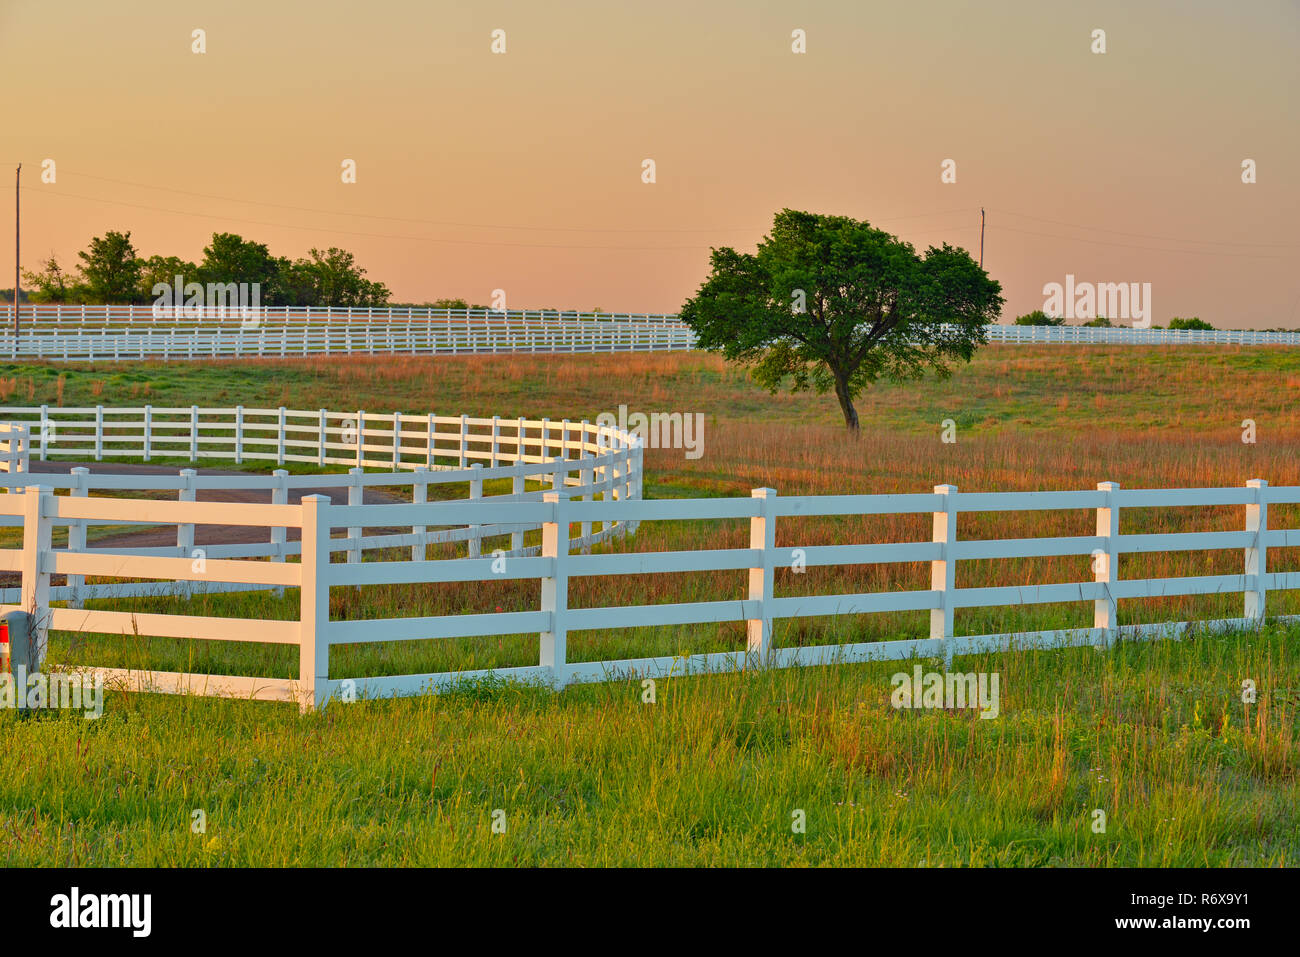 Cimarron Valley horse rehab centre, Stroud, Oklahoma, USA Stock Photo